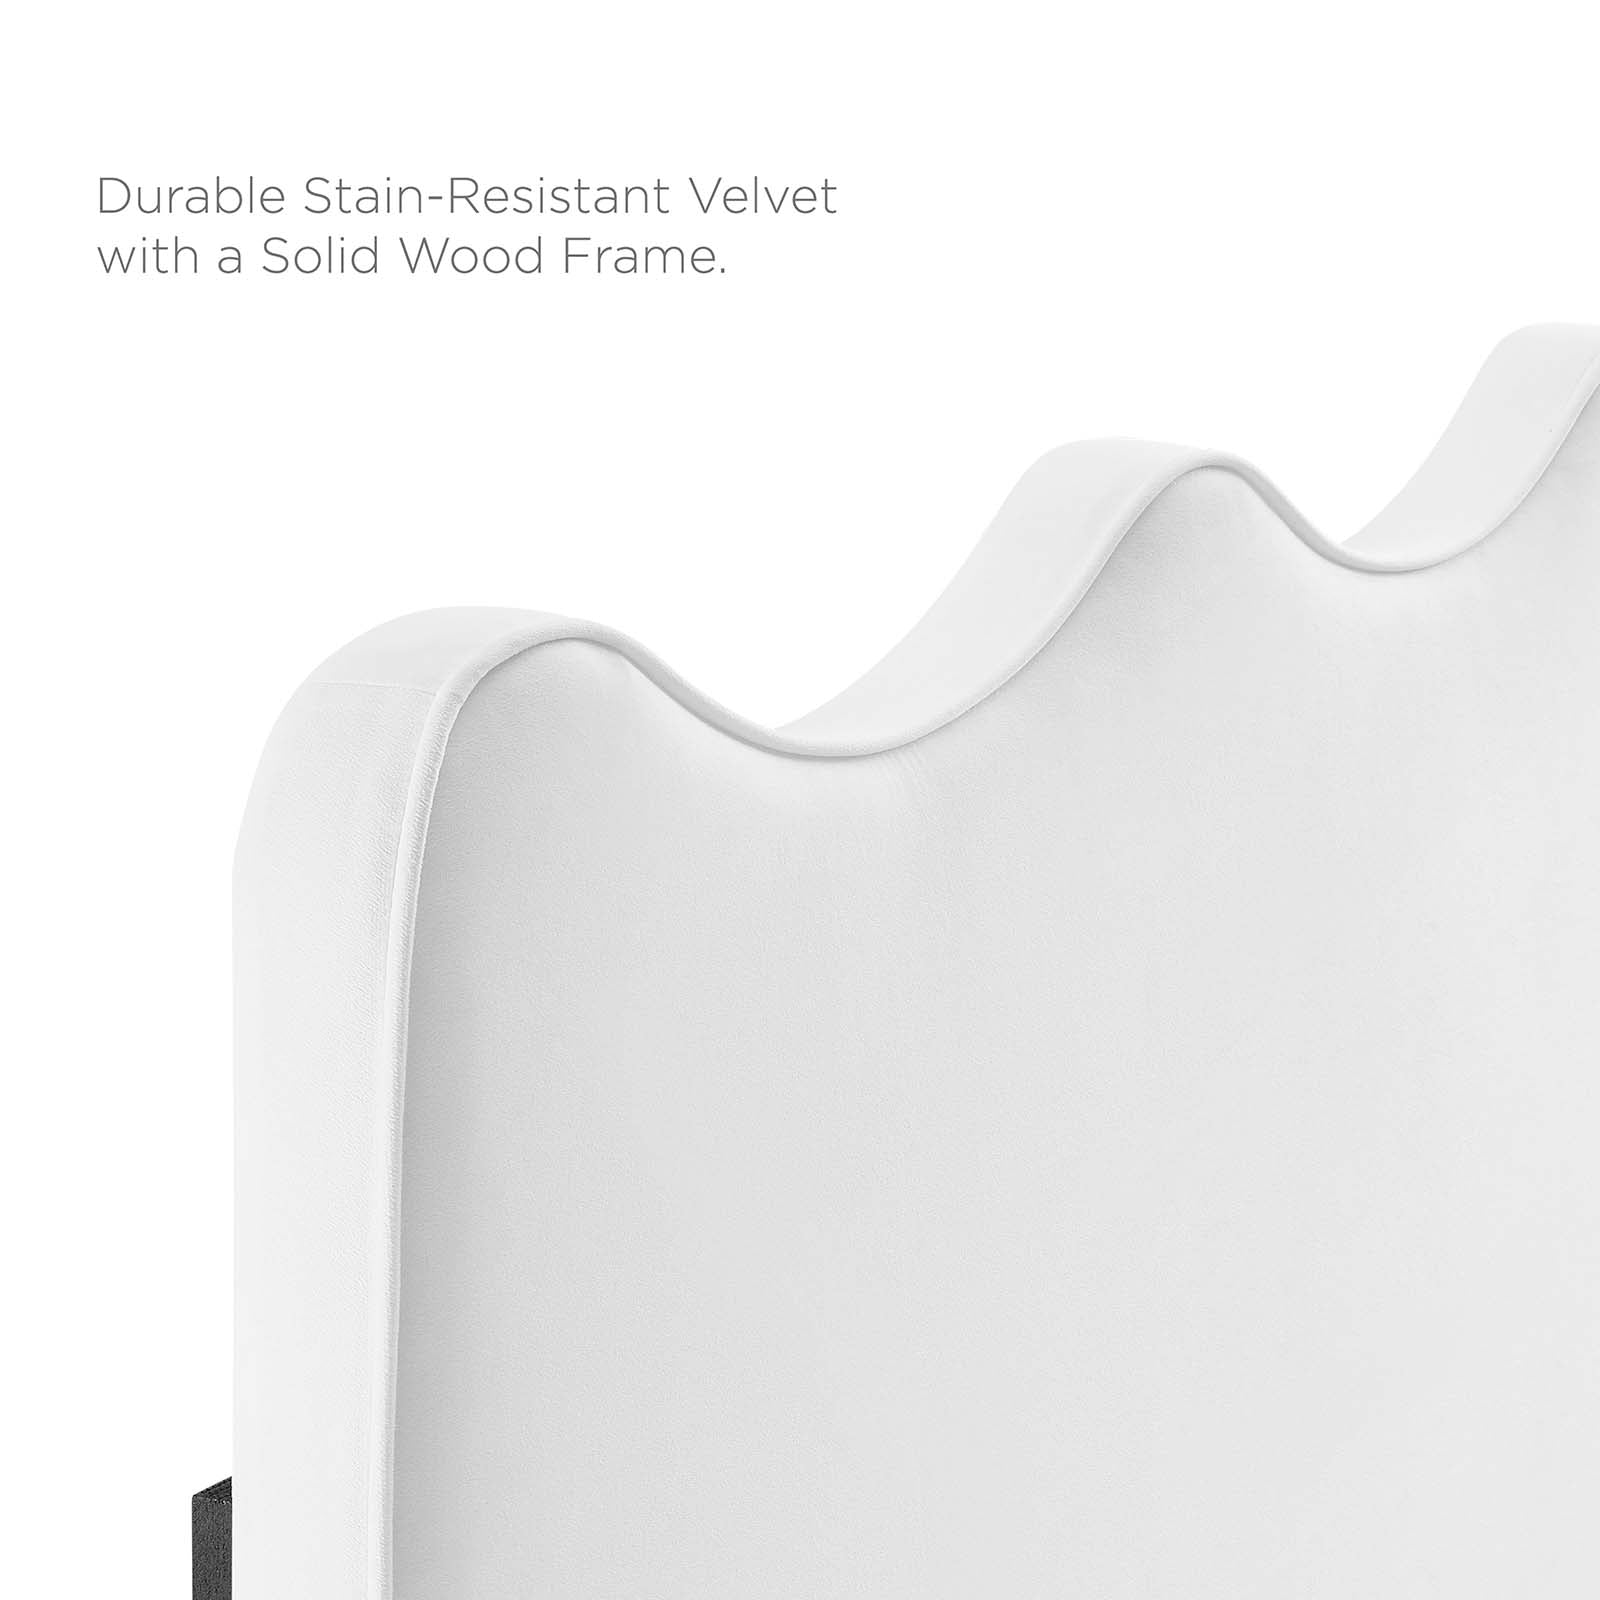 Current Performance Velvet Platform Bed With Gold Metal Sleeves - East Shore Modern Home Furnishings